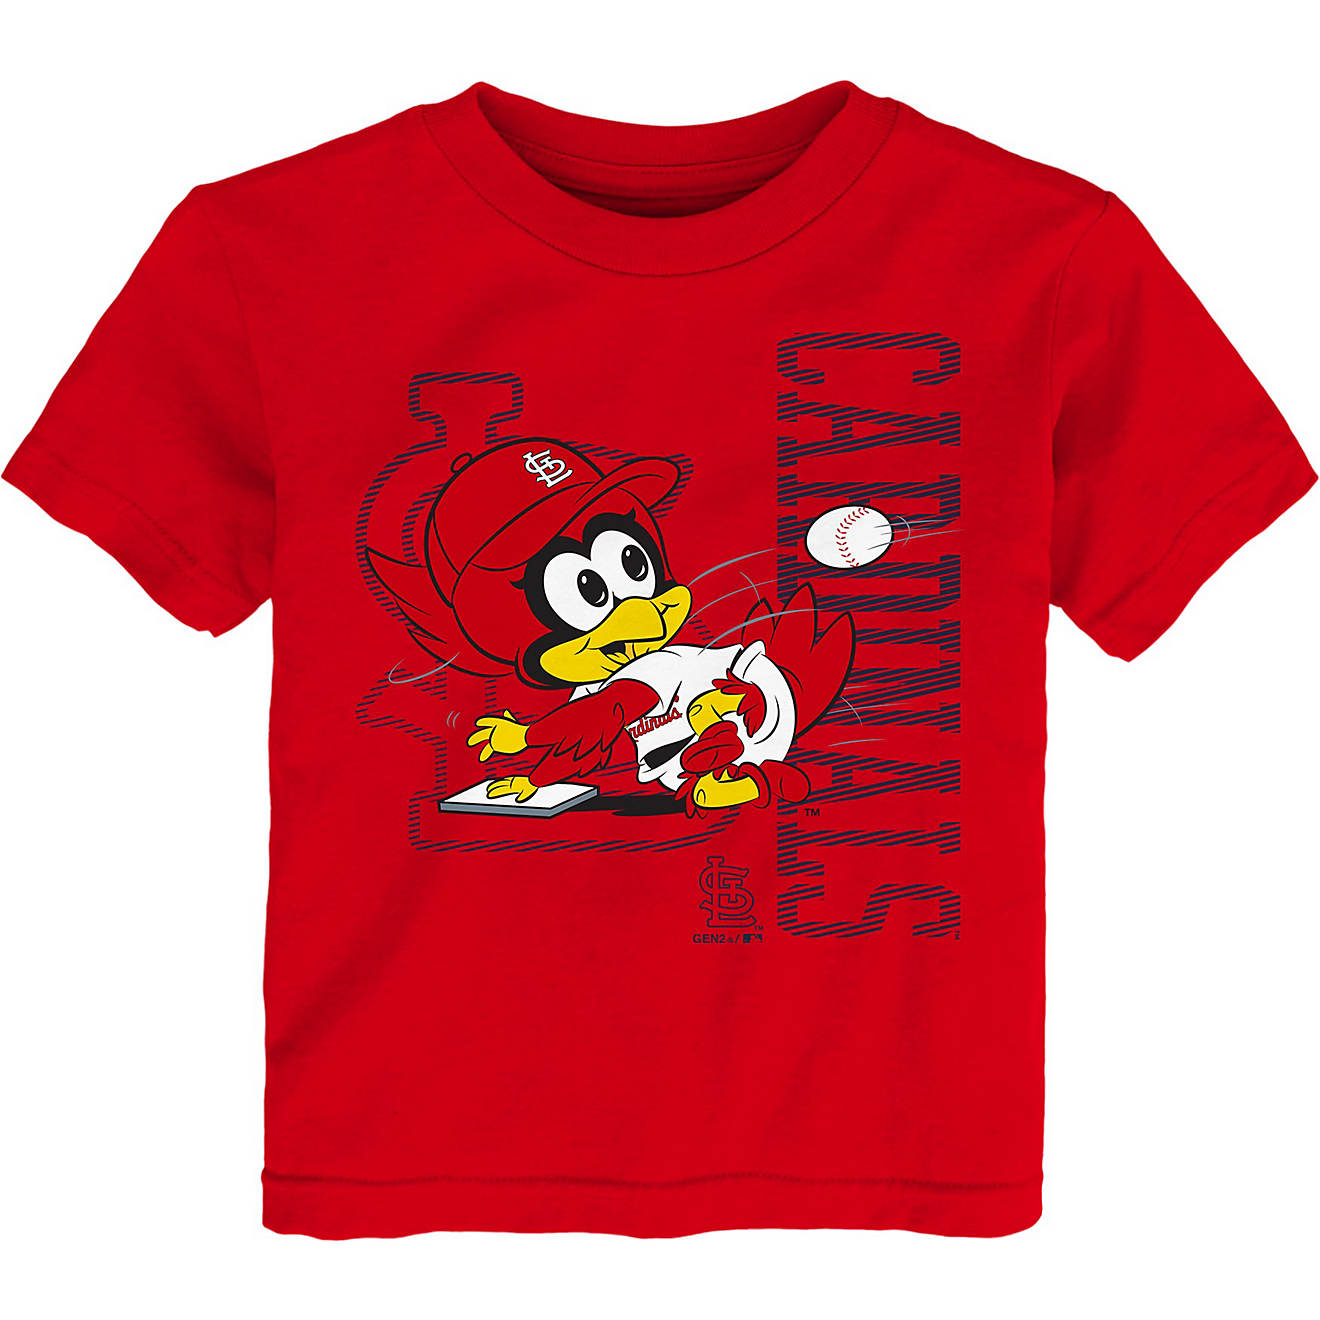 Outerstuff Toddler Boys' St. Louis Cardinals Baby Mascot 2.0 Graphic T-shirt